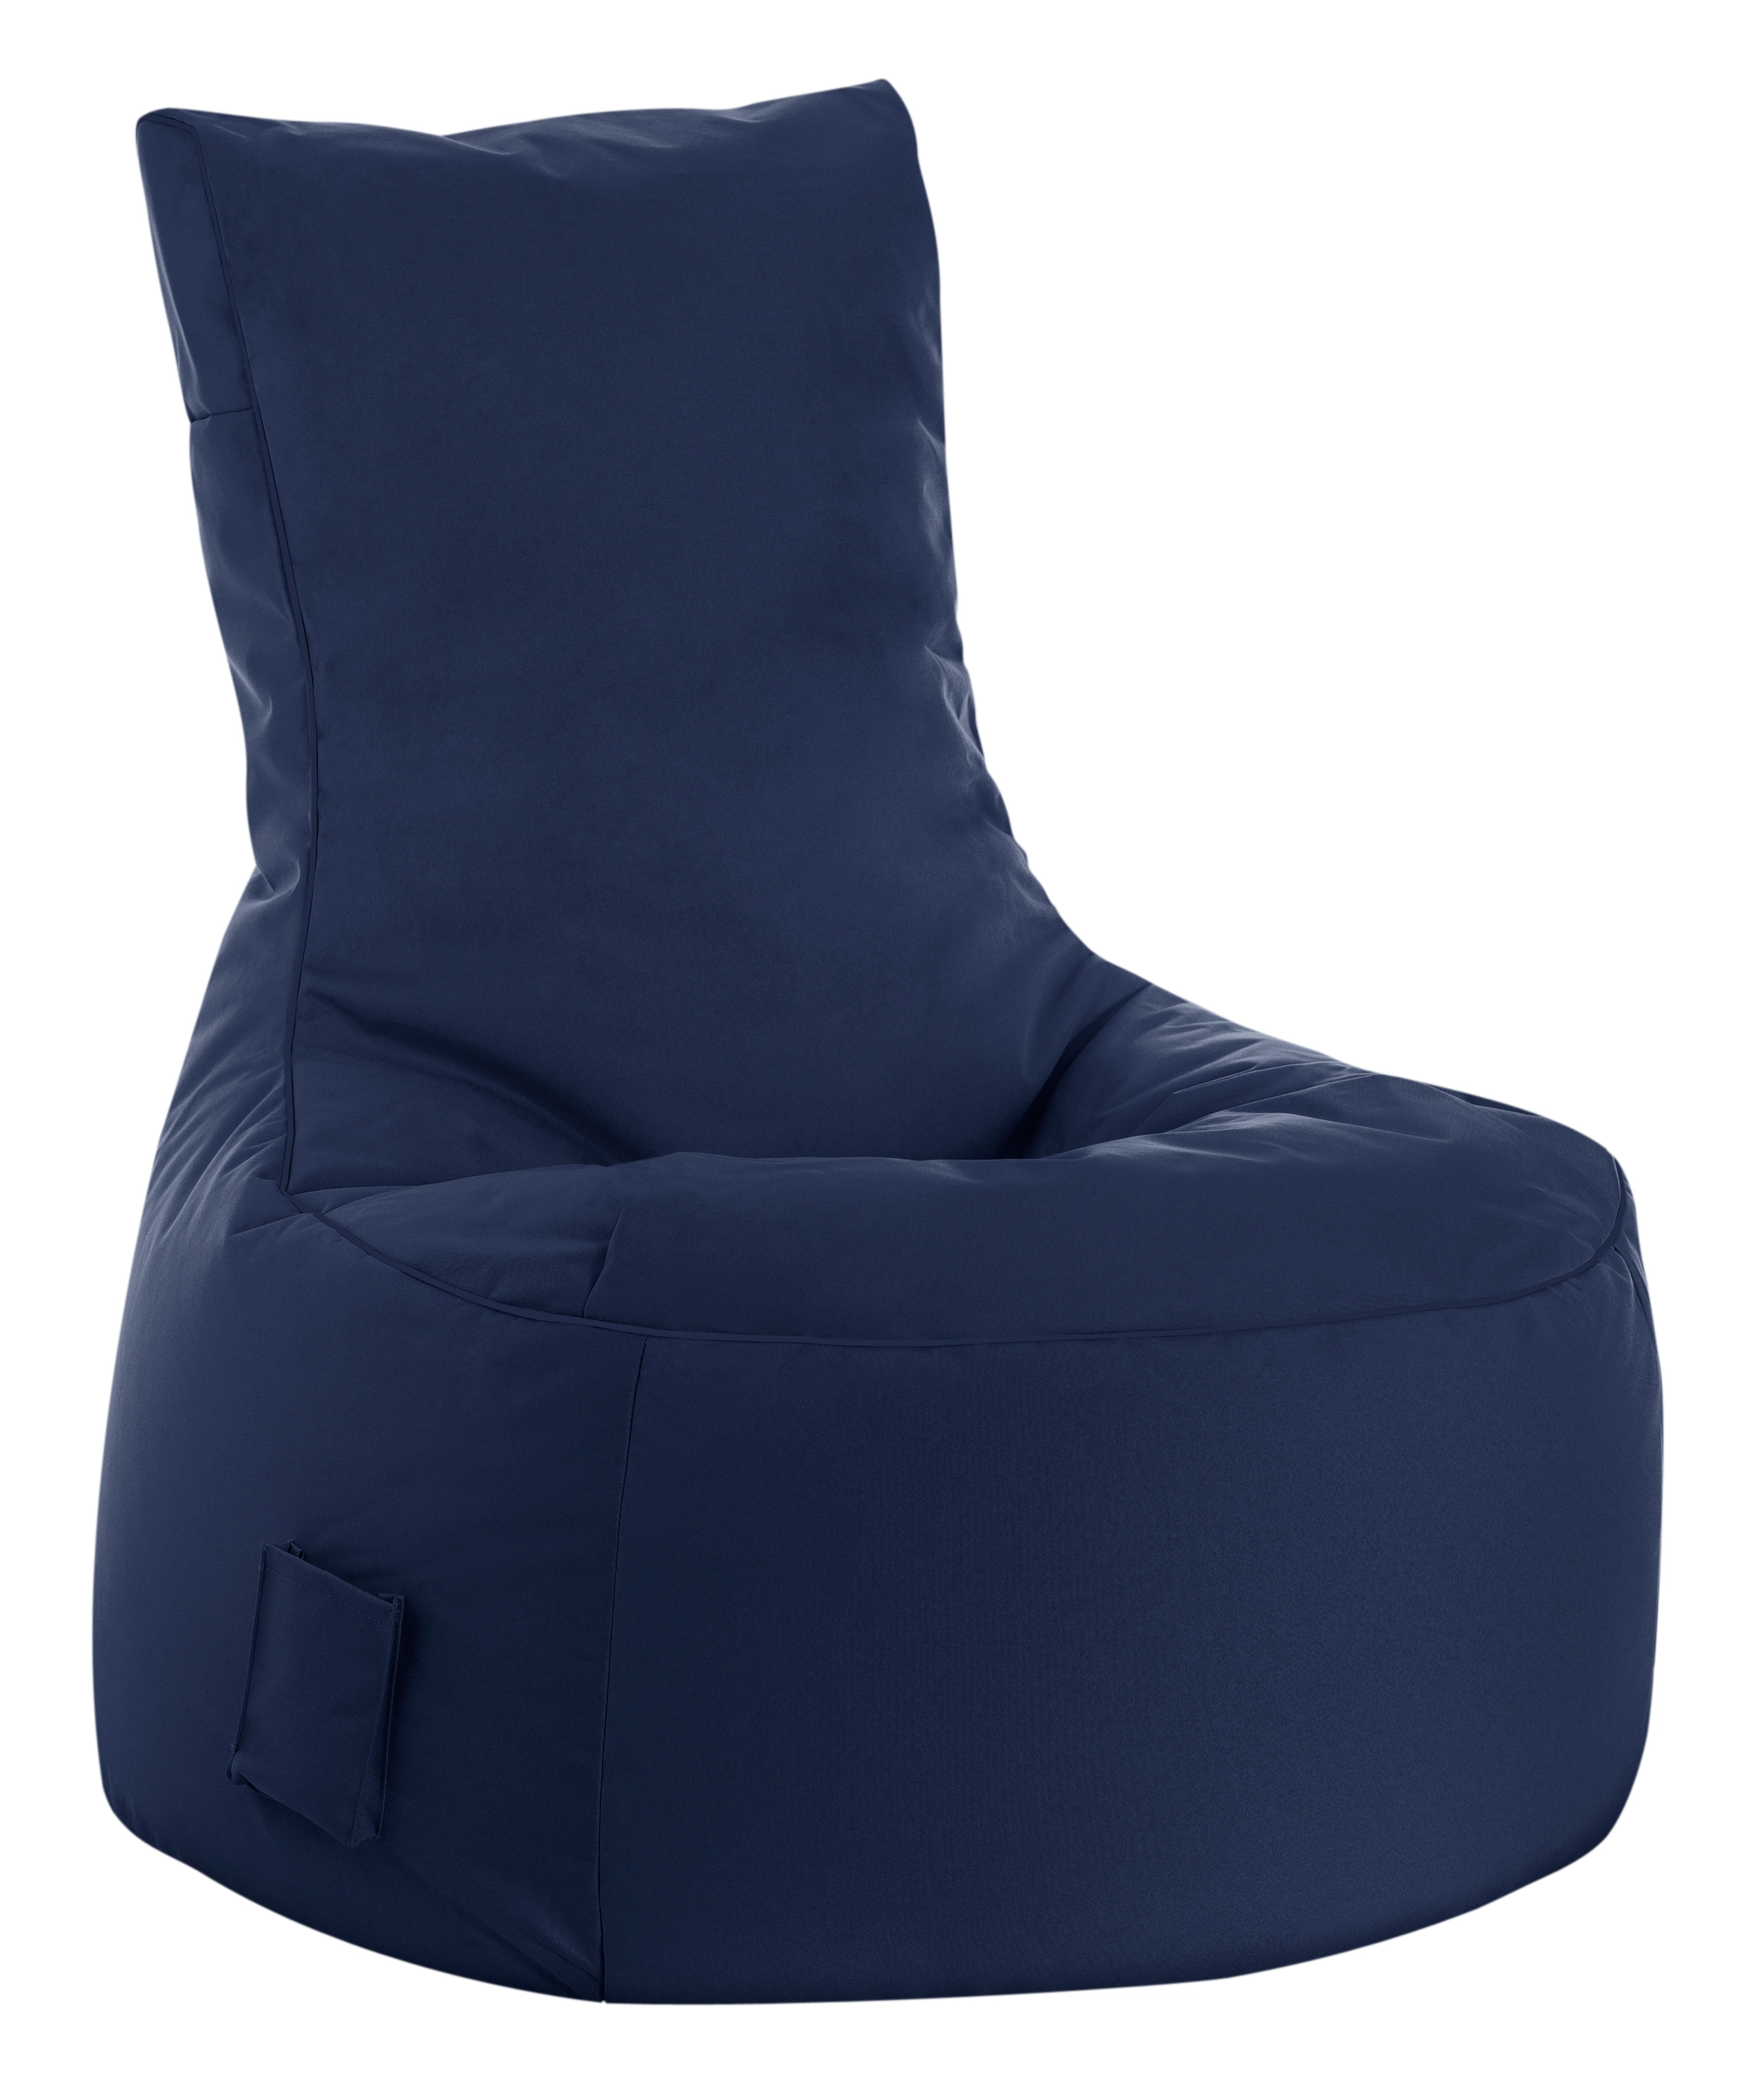 OBI bei Point Swing 300 kaufen l Sitting Scuba Sitzsack Jeansblau